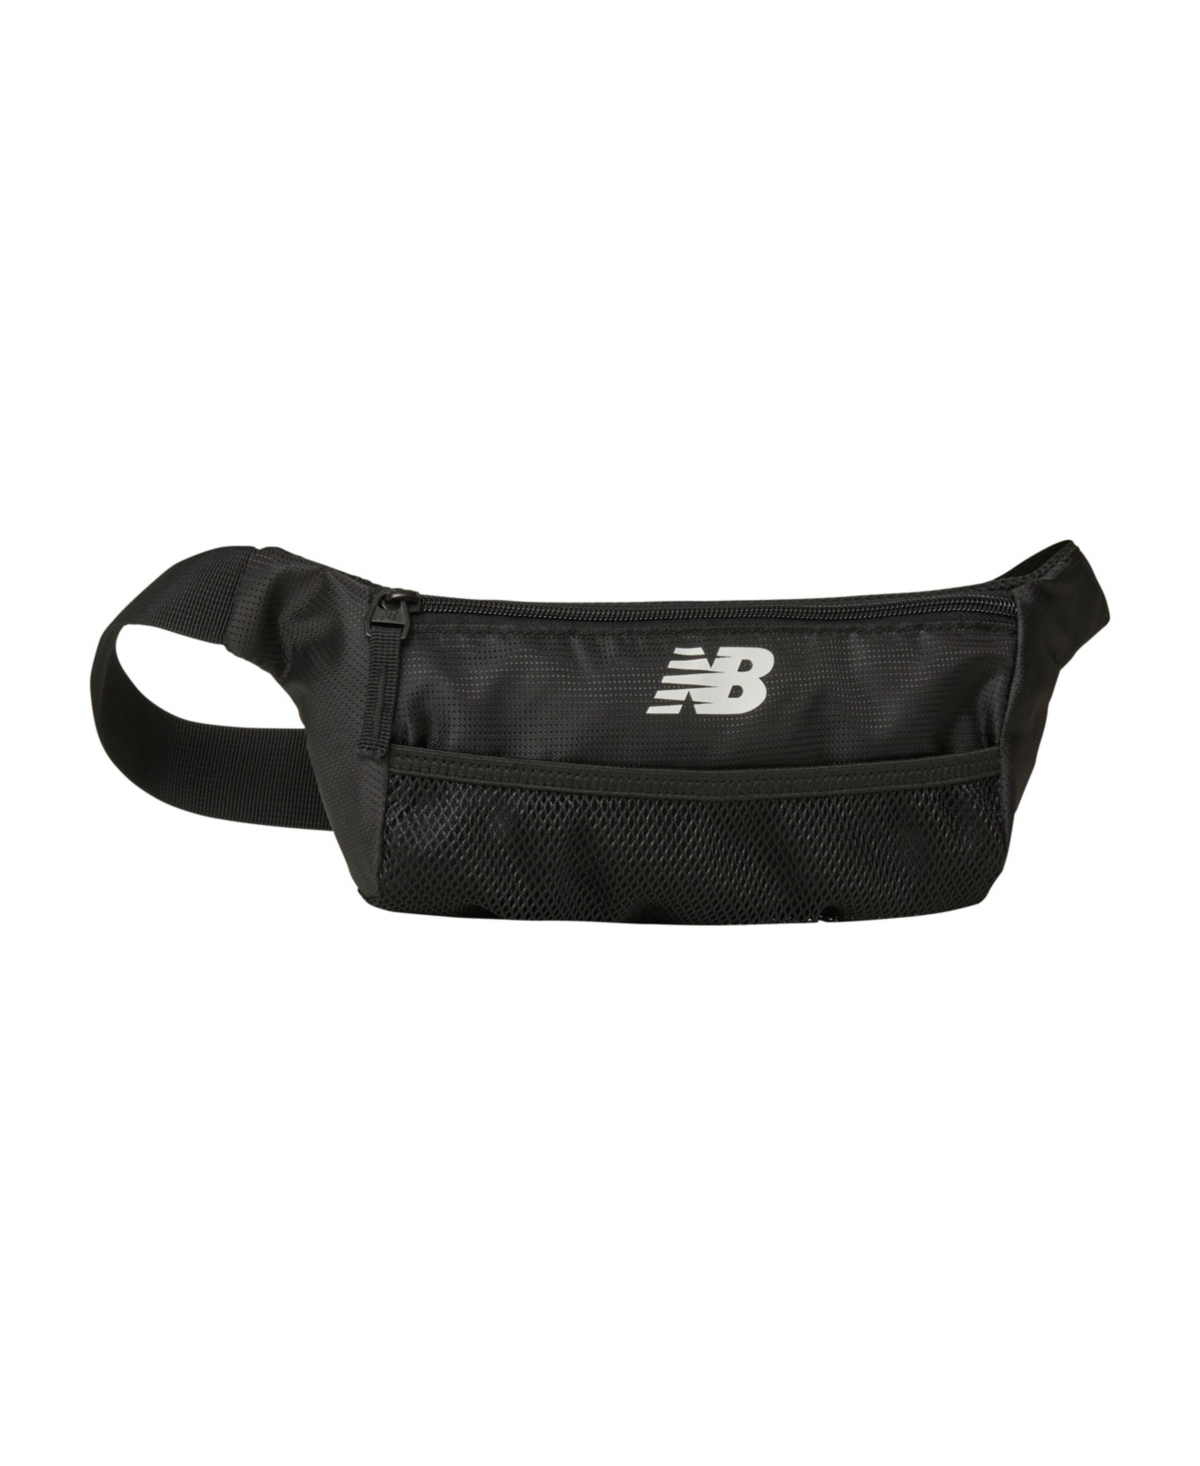 New Balance Opp Core Waist Bag, Small In Black